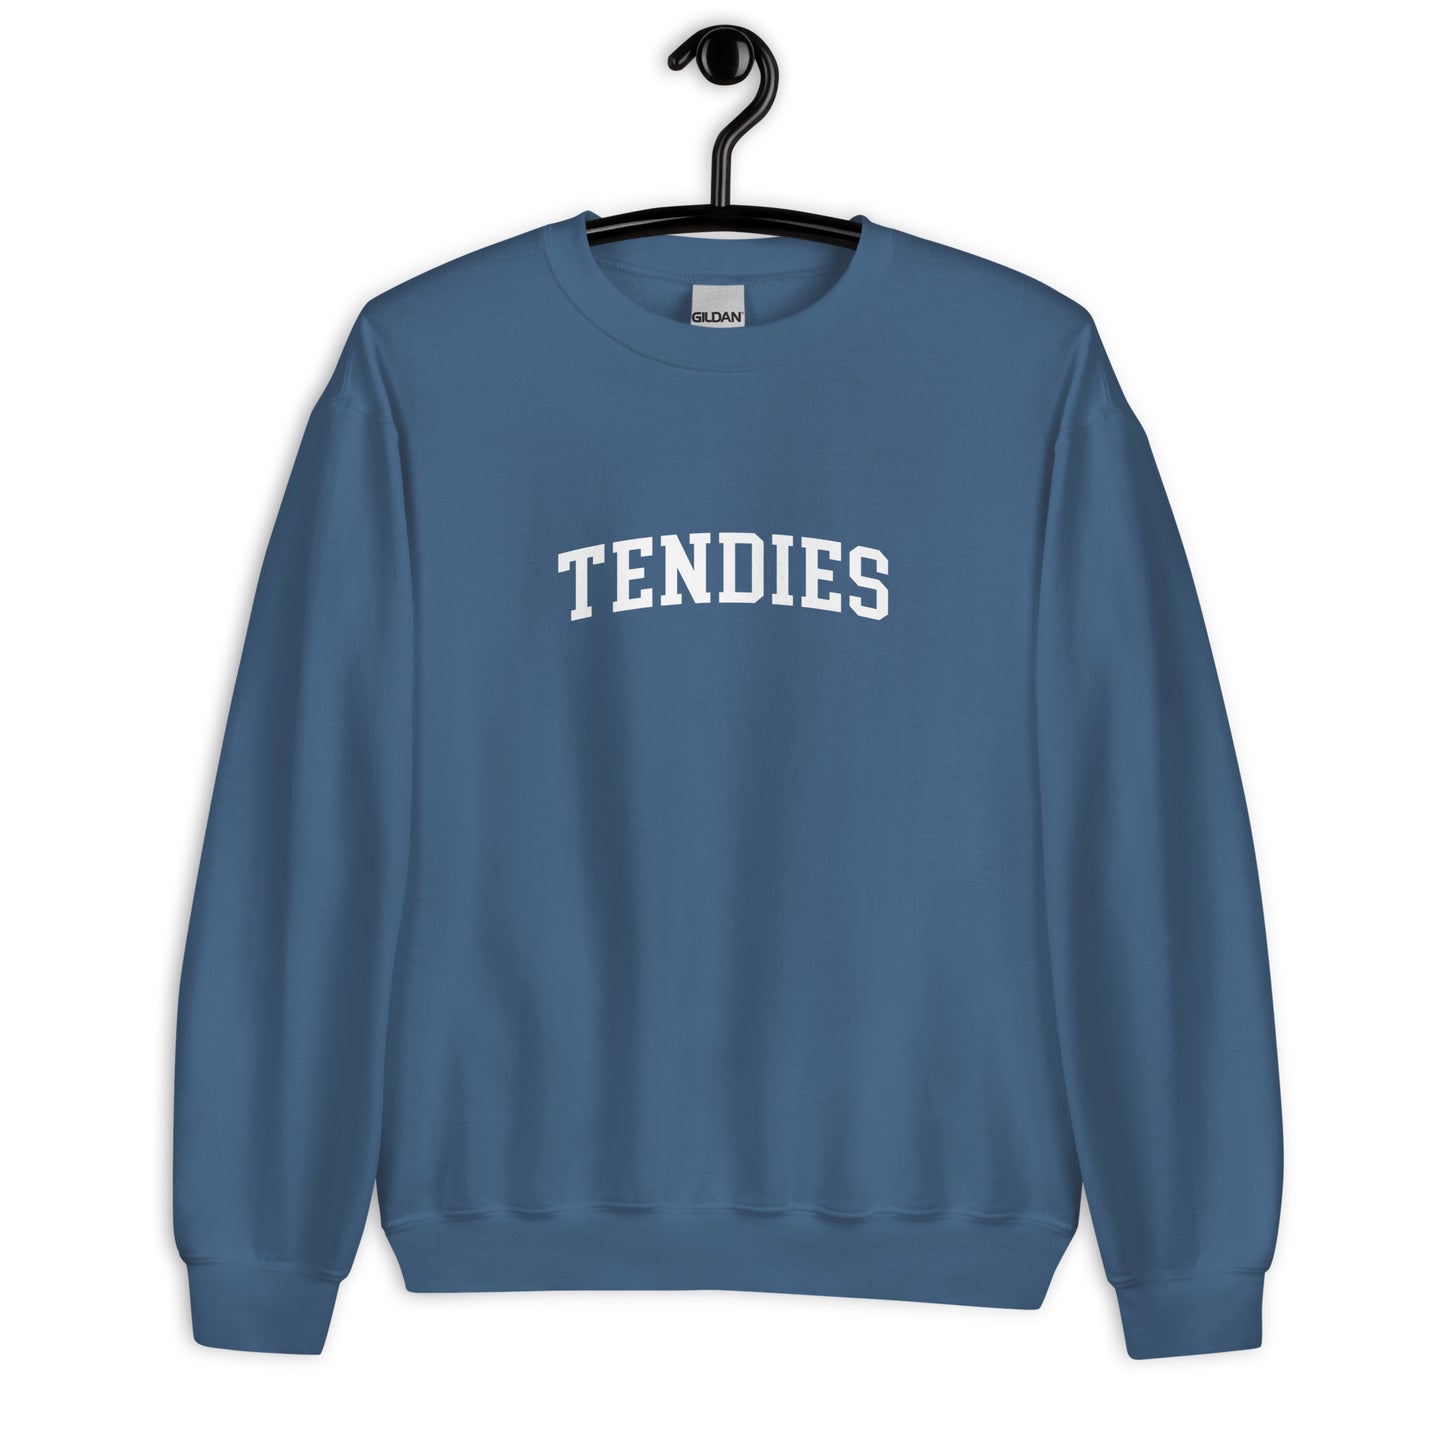 Tendies Sweatshirt - Arched Font